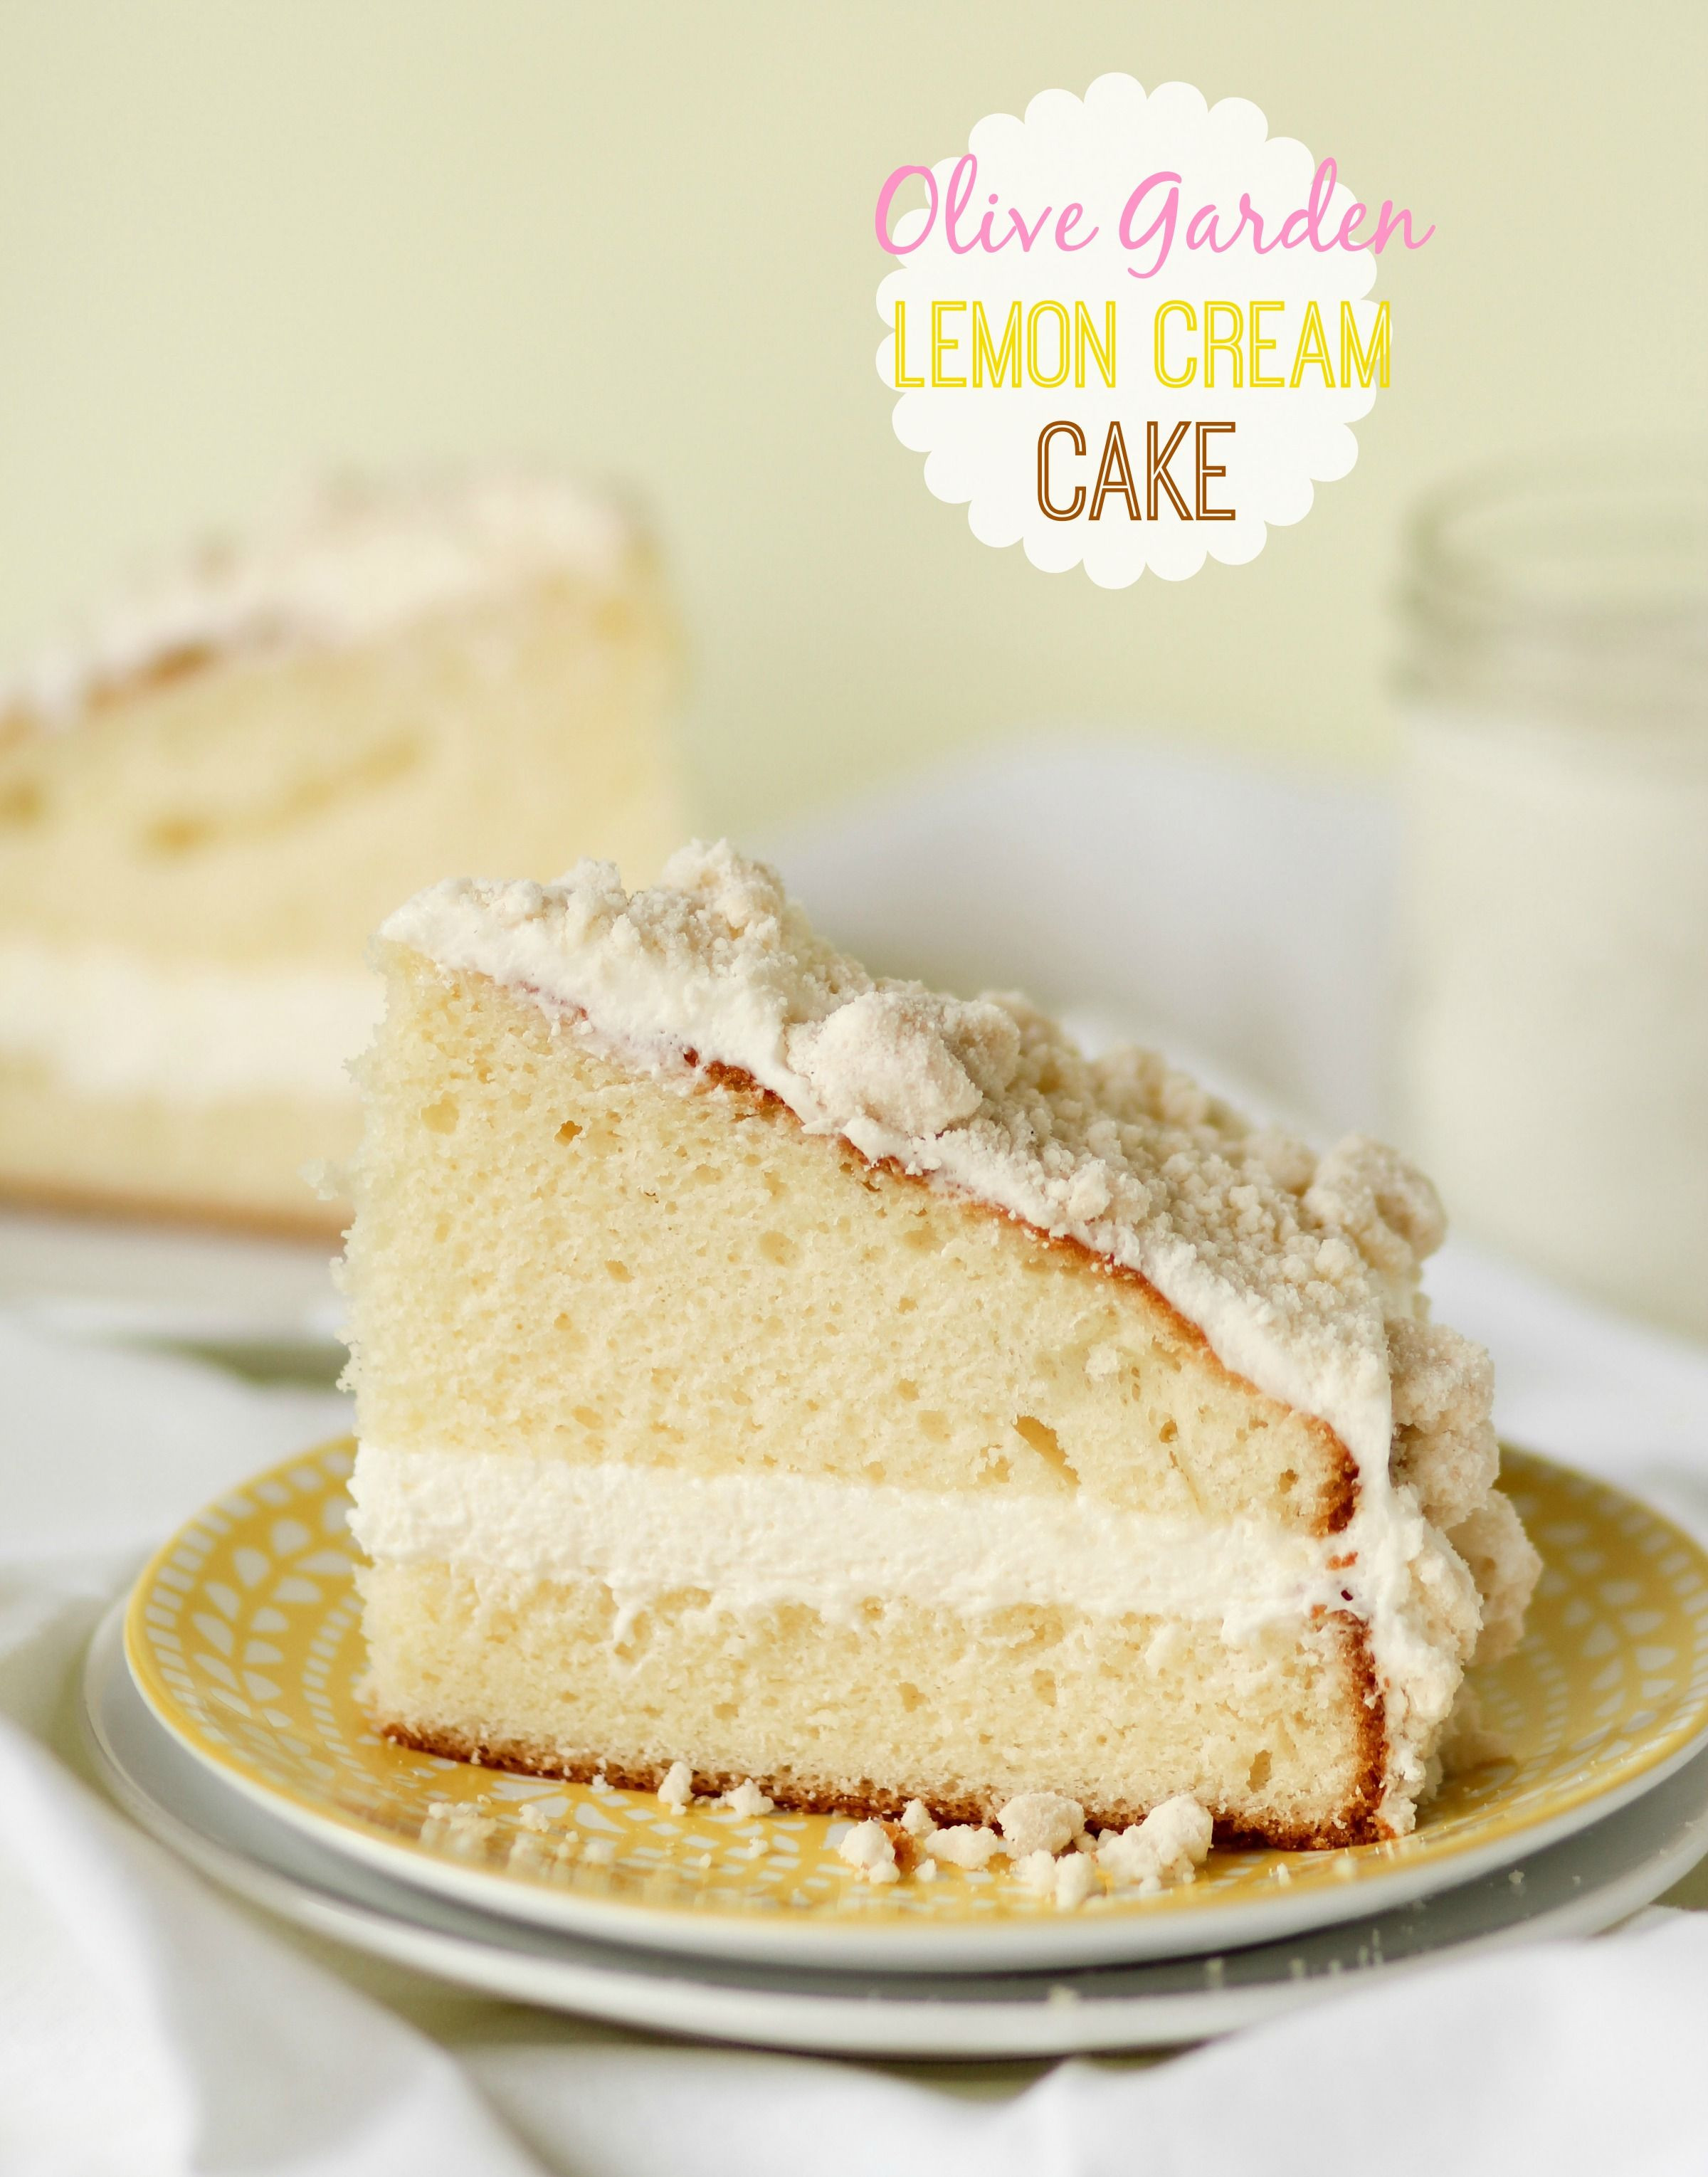 Olive Garden Lemon Creme Cake Recipe
 Olive Garden Lemon Cream Cake from Confessions of a